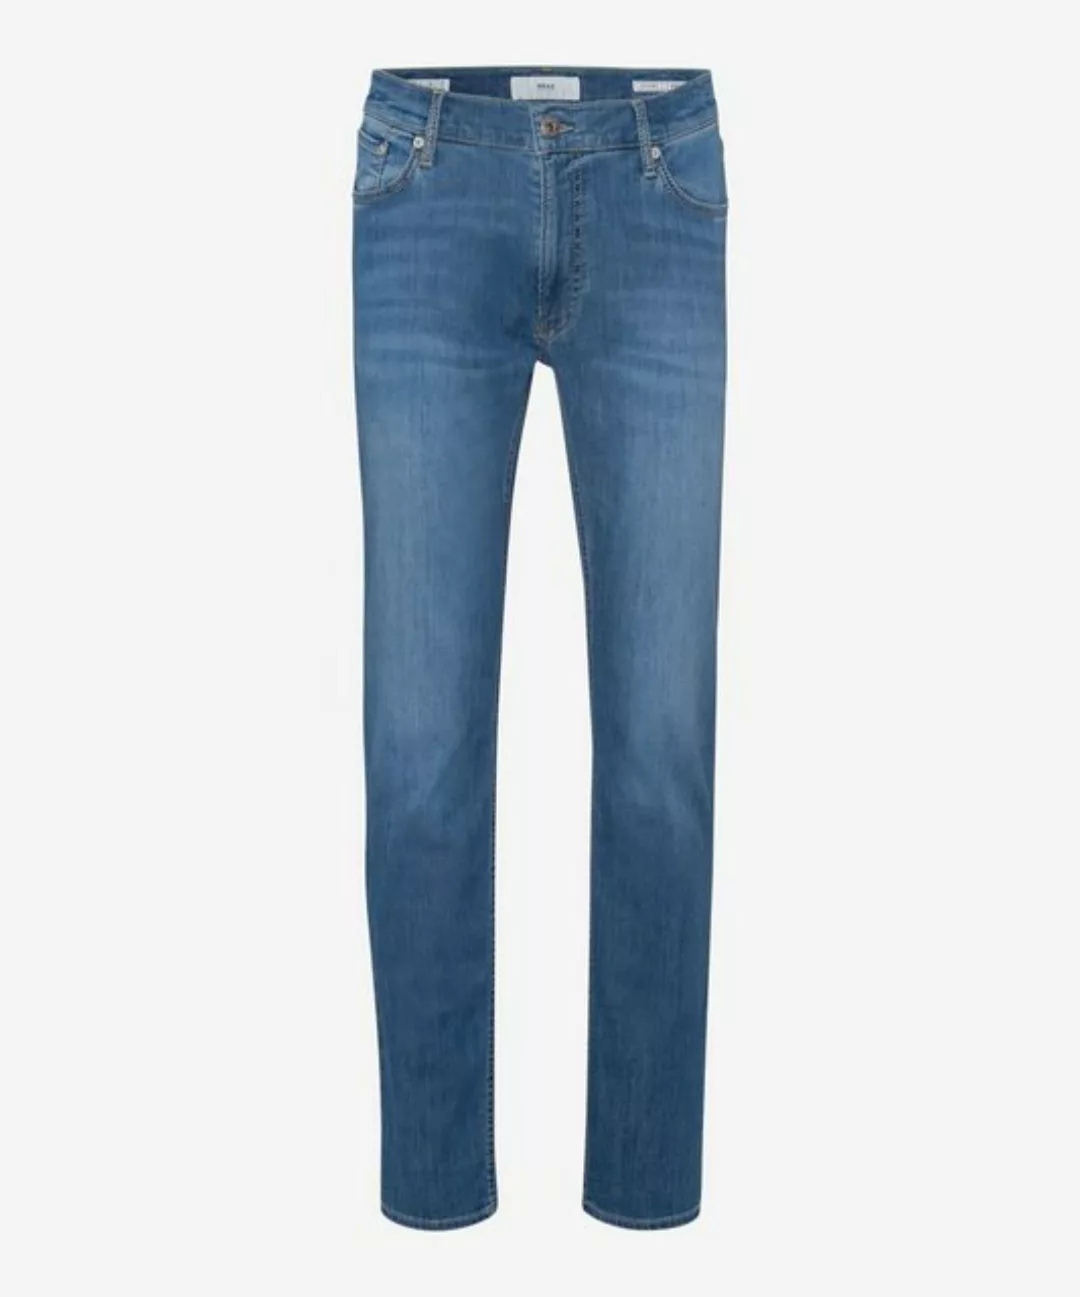 Brax 5-Pocket-Jeans BRAX CHUCK light blue used 7953020 84-6254-27 - HI-FLEX günstig online kaufen